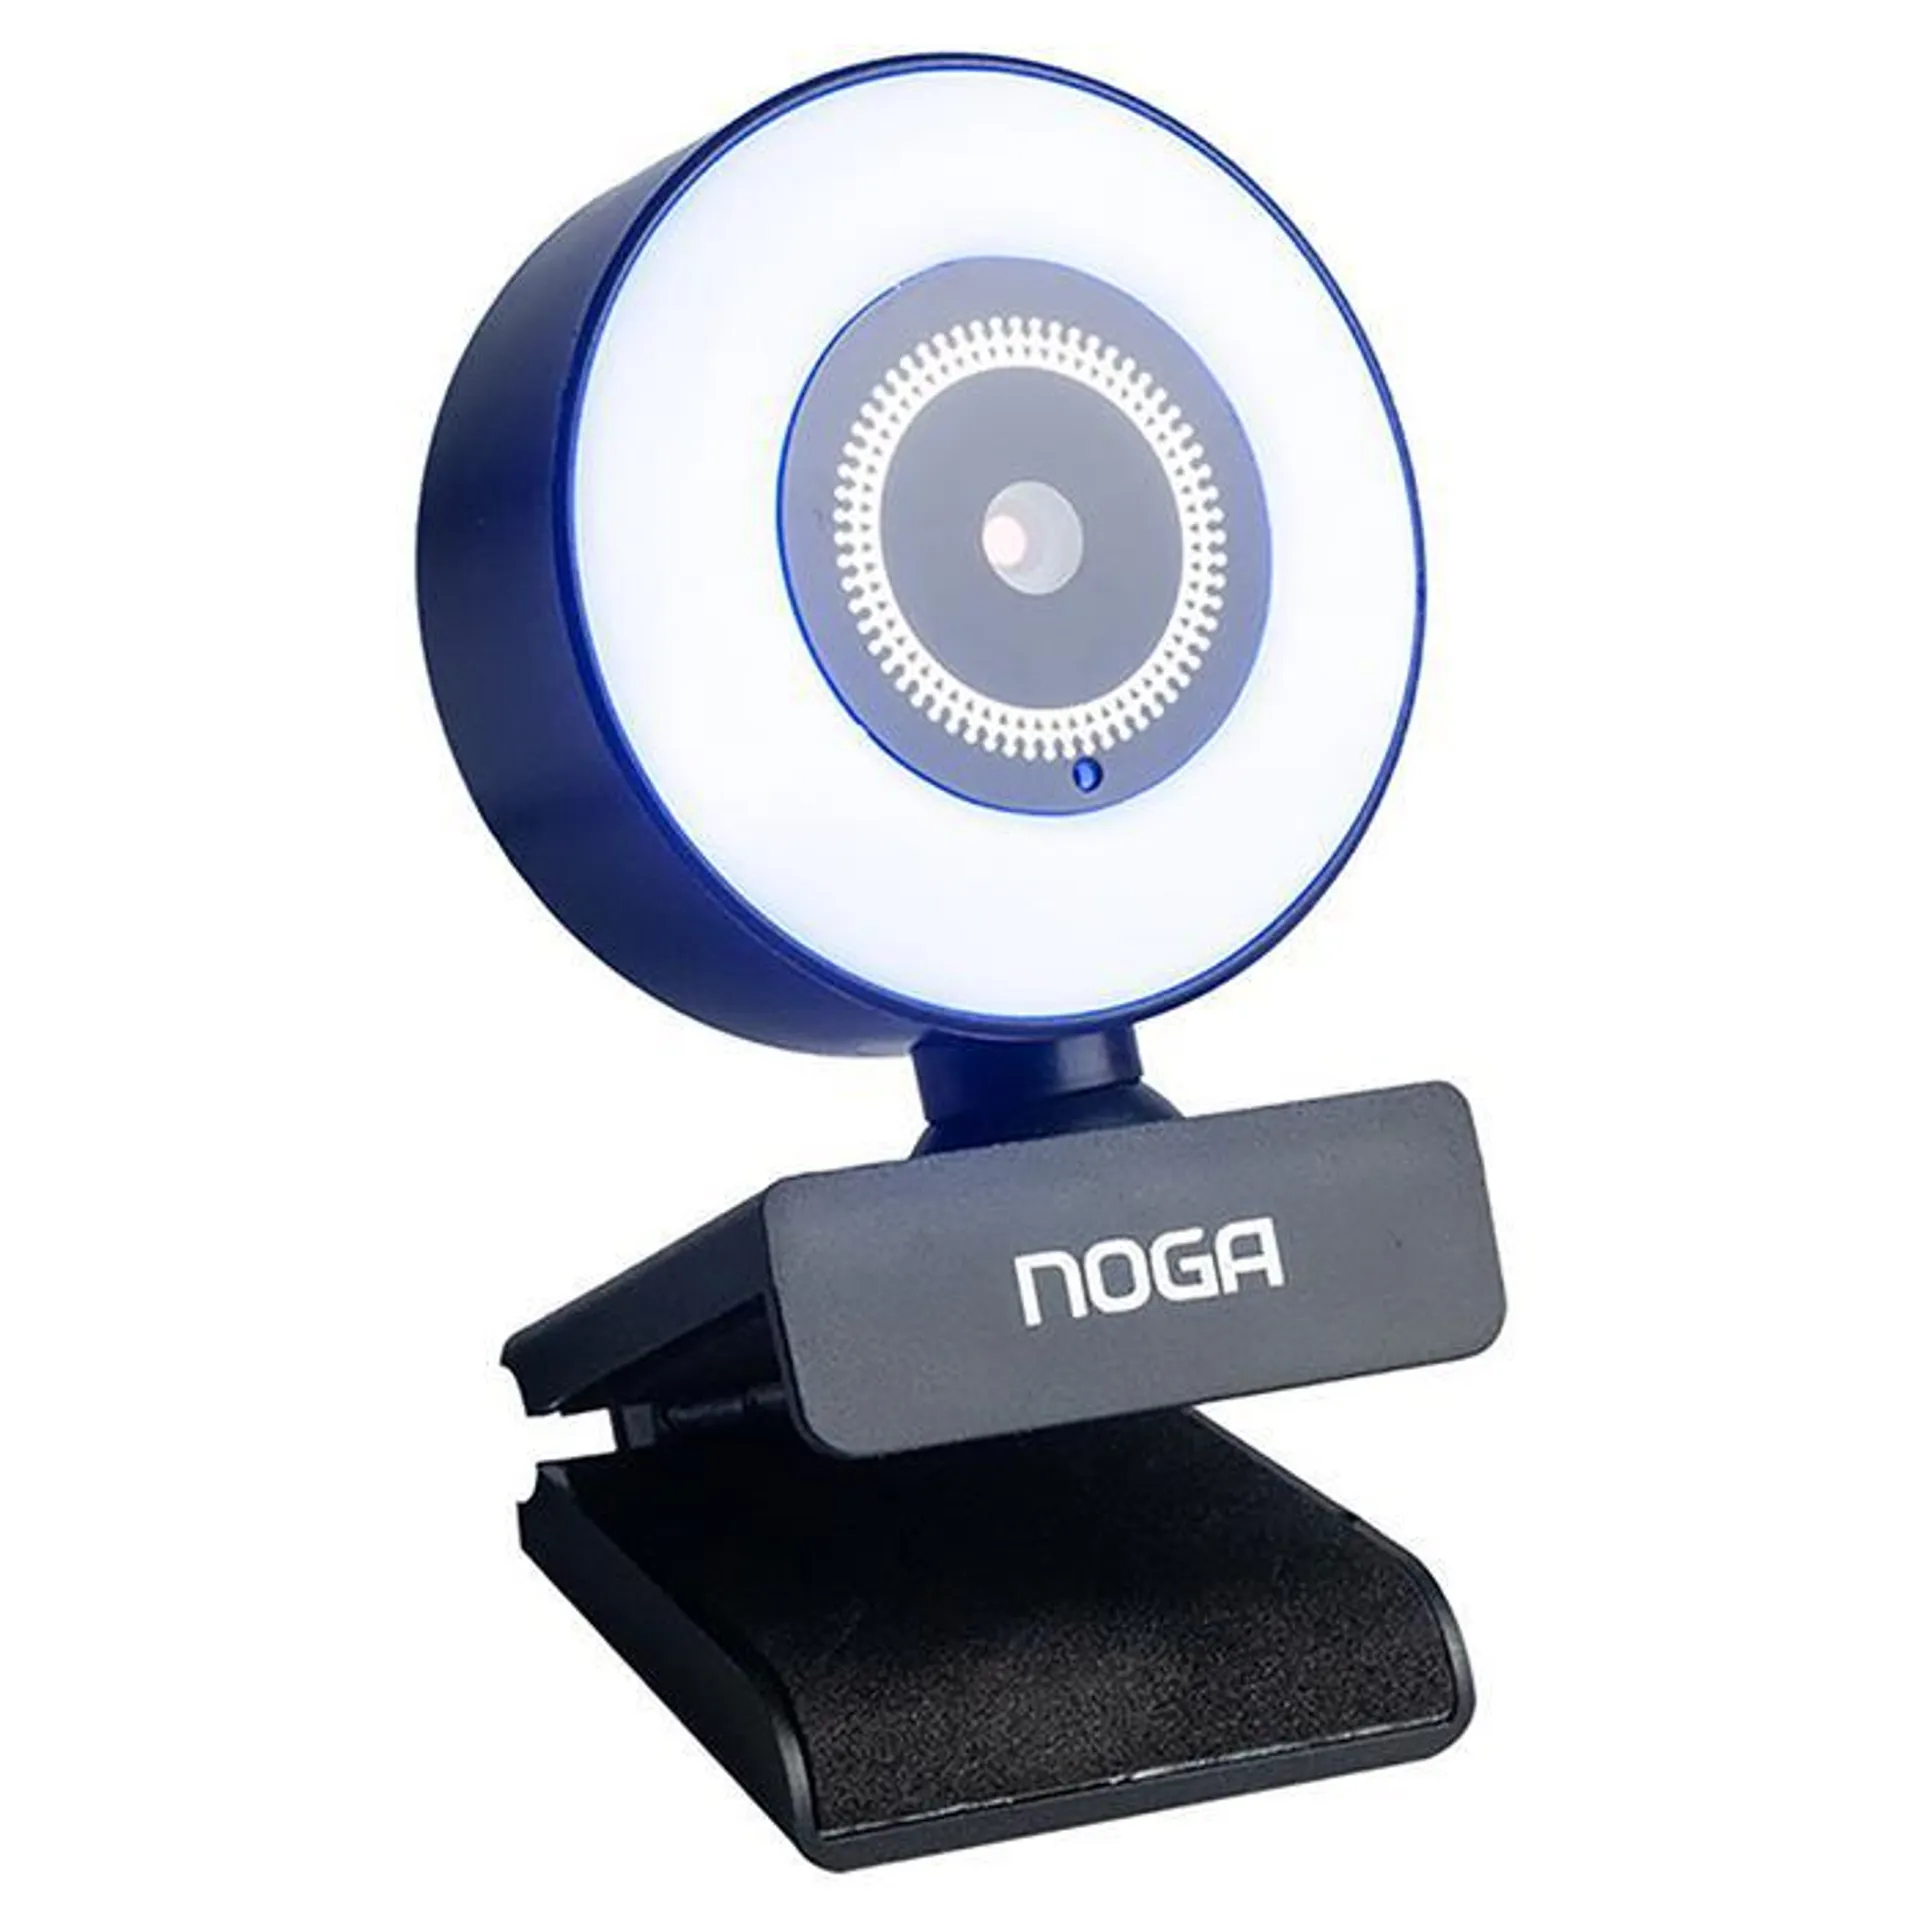 CAMARA WEB NOGA NGW-111 FULLHD 1080P WEBCAM USB MICROFONO CON LED + TRIPODE